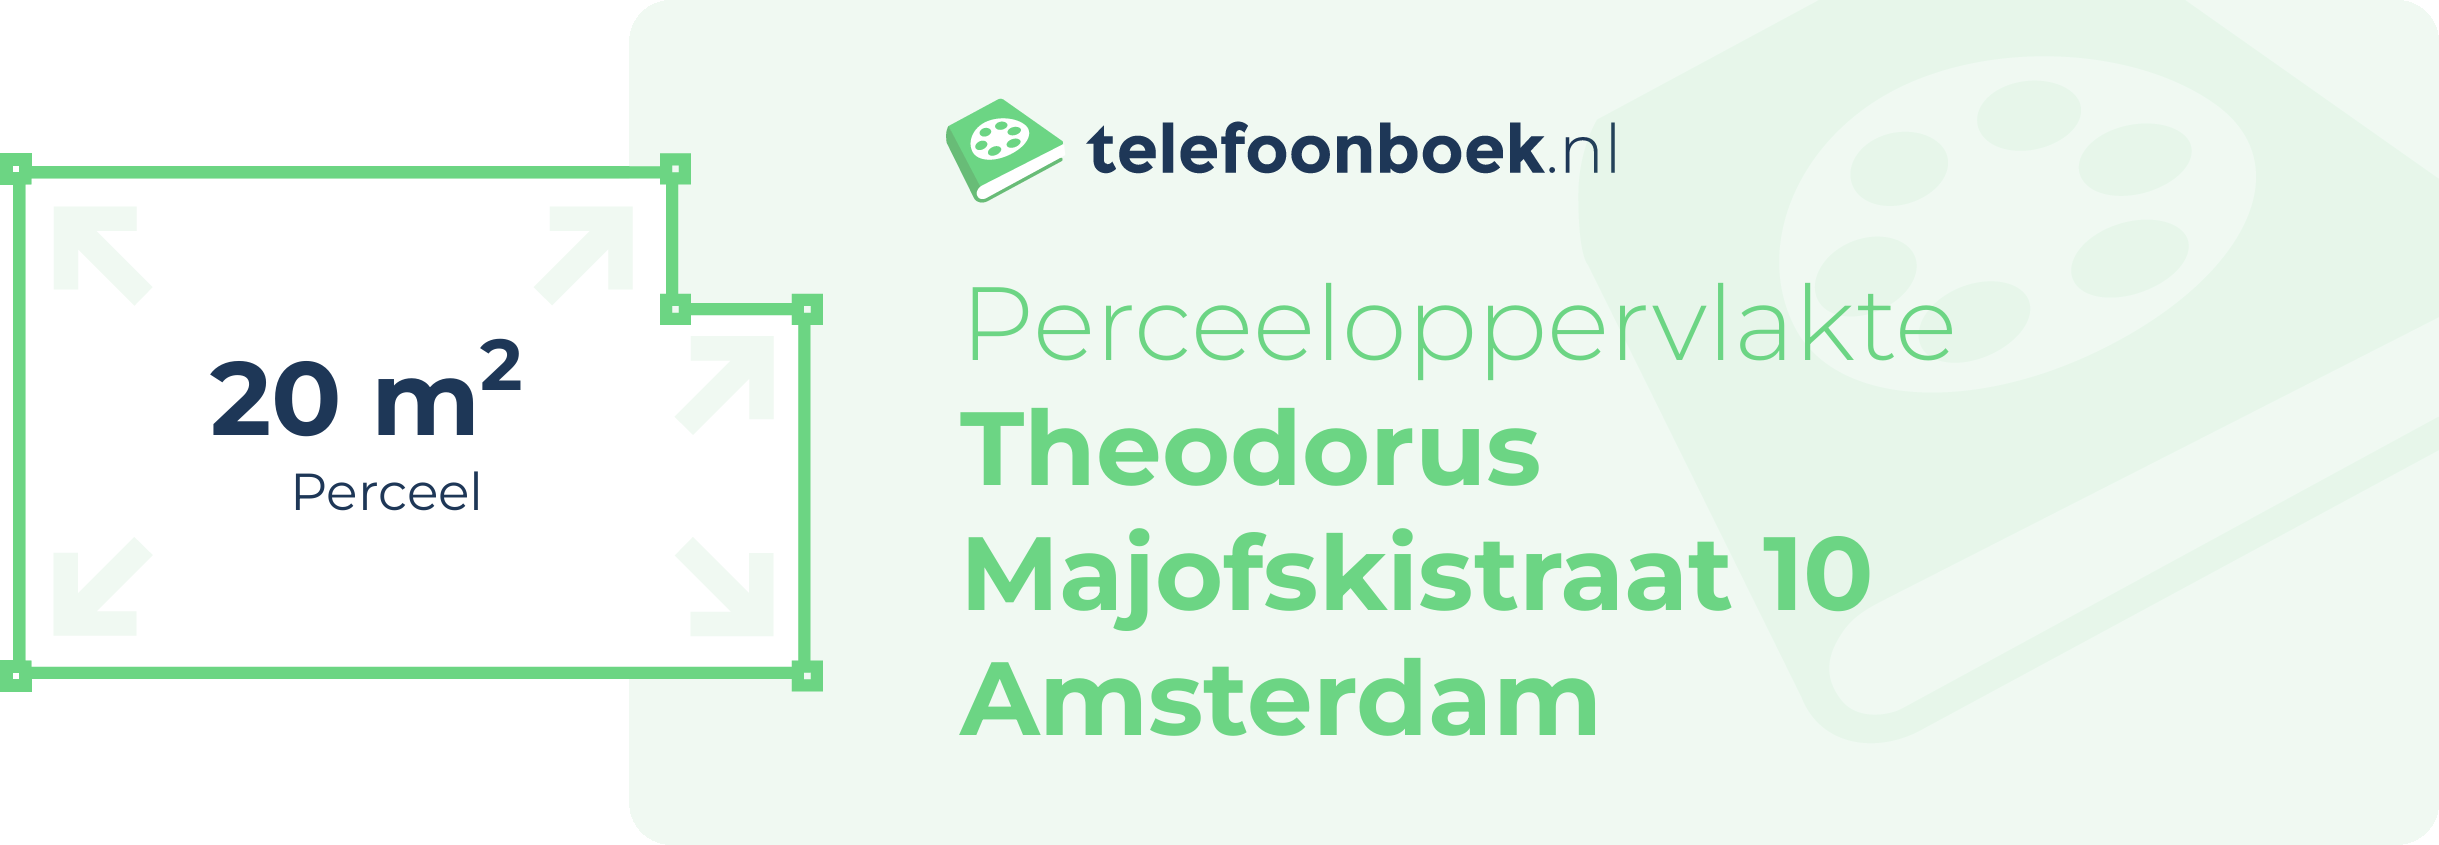 Perceeloppervlakte Theodorus Majofskistraat 10 Amsterdam